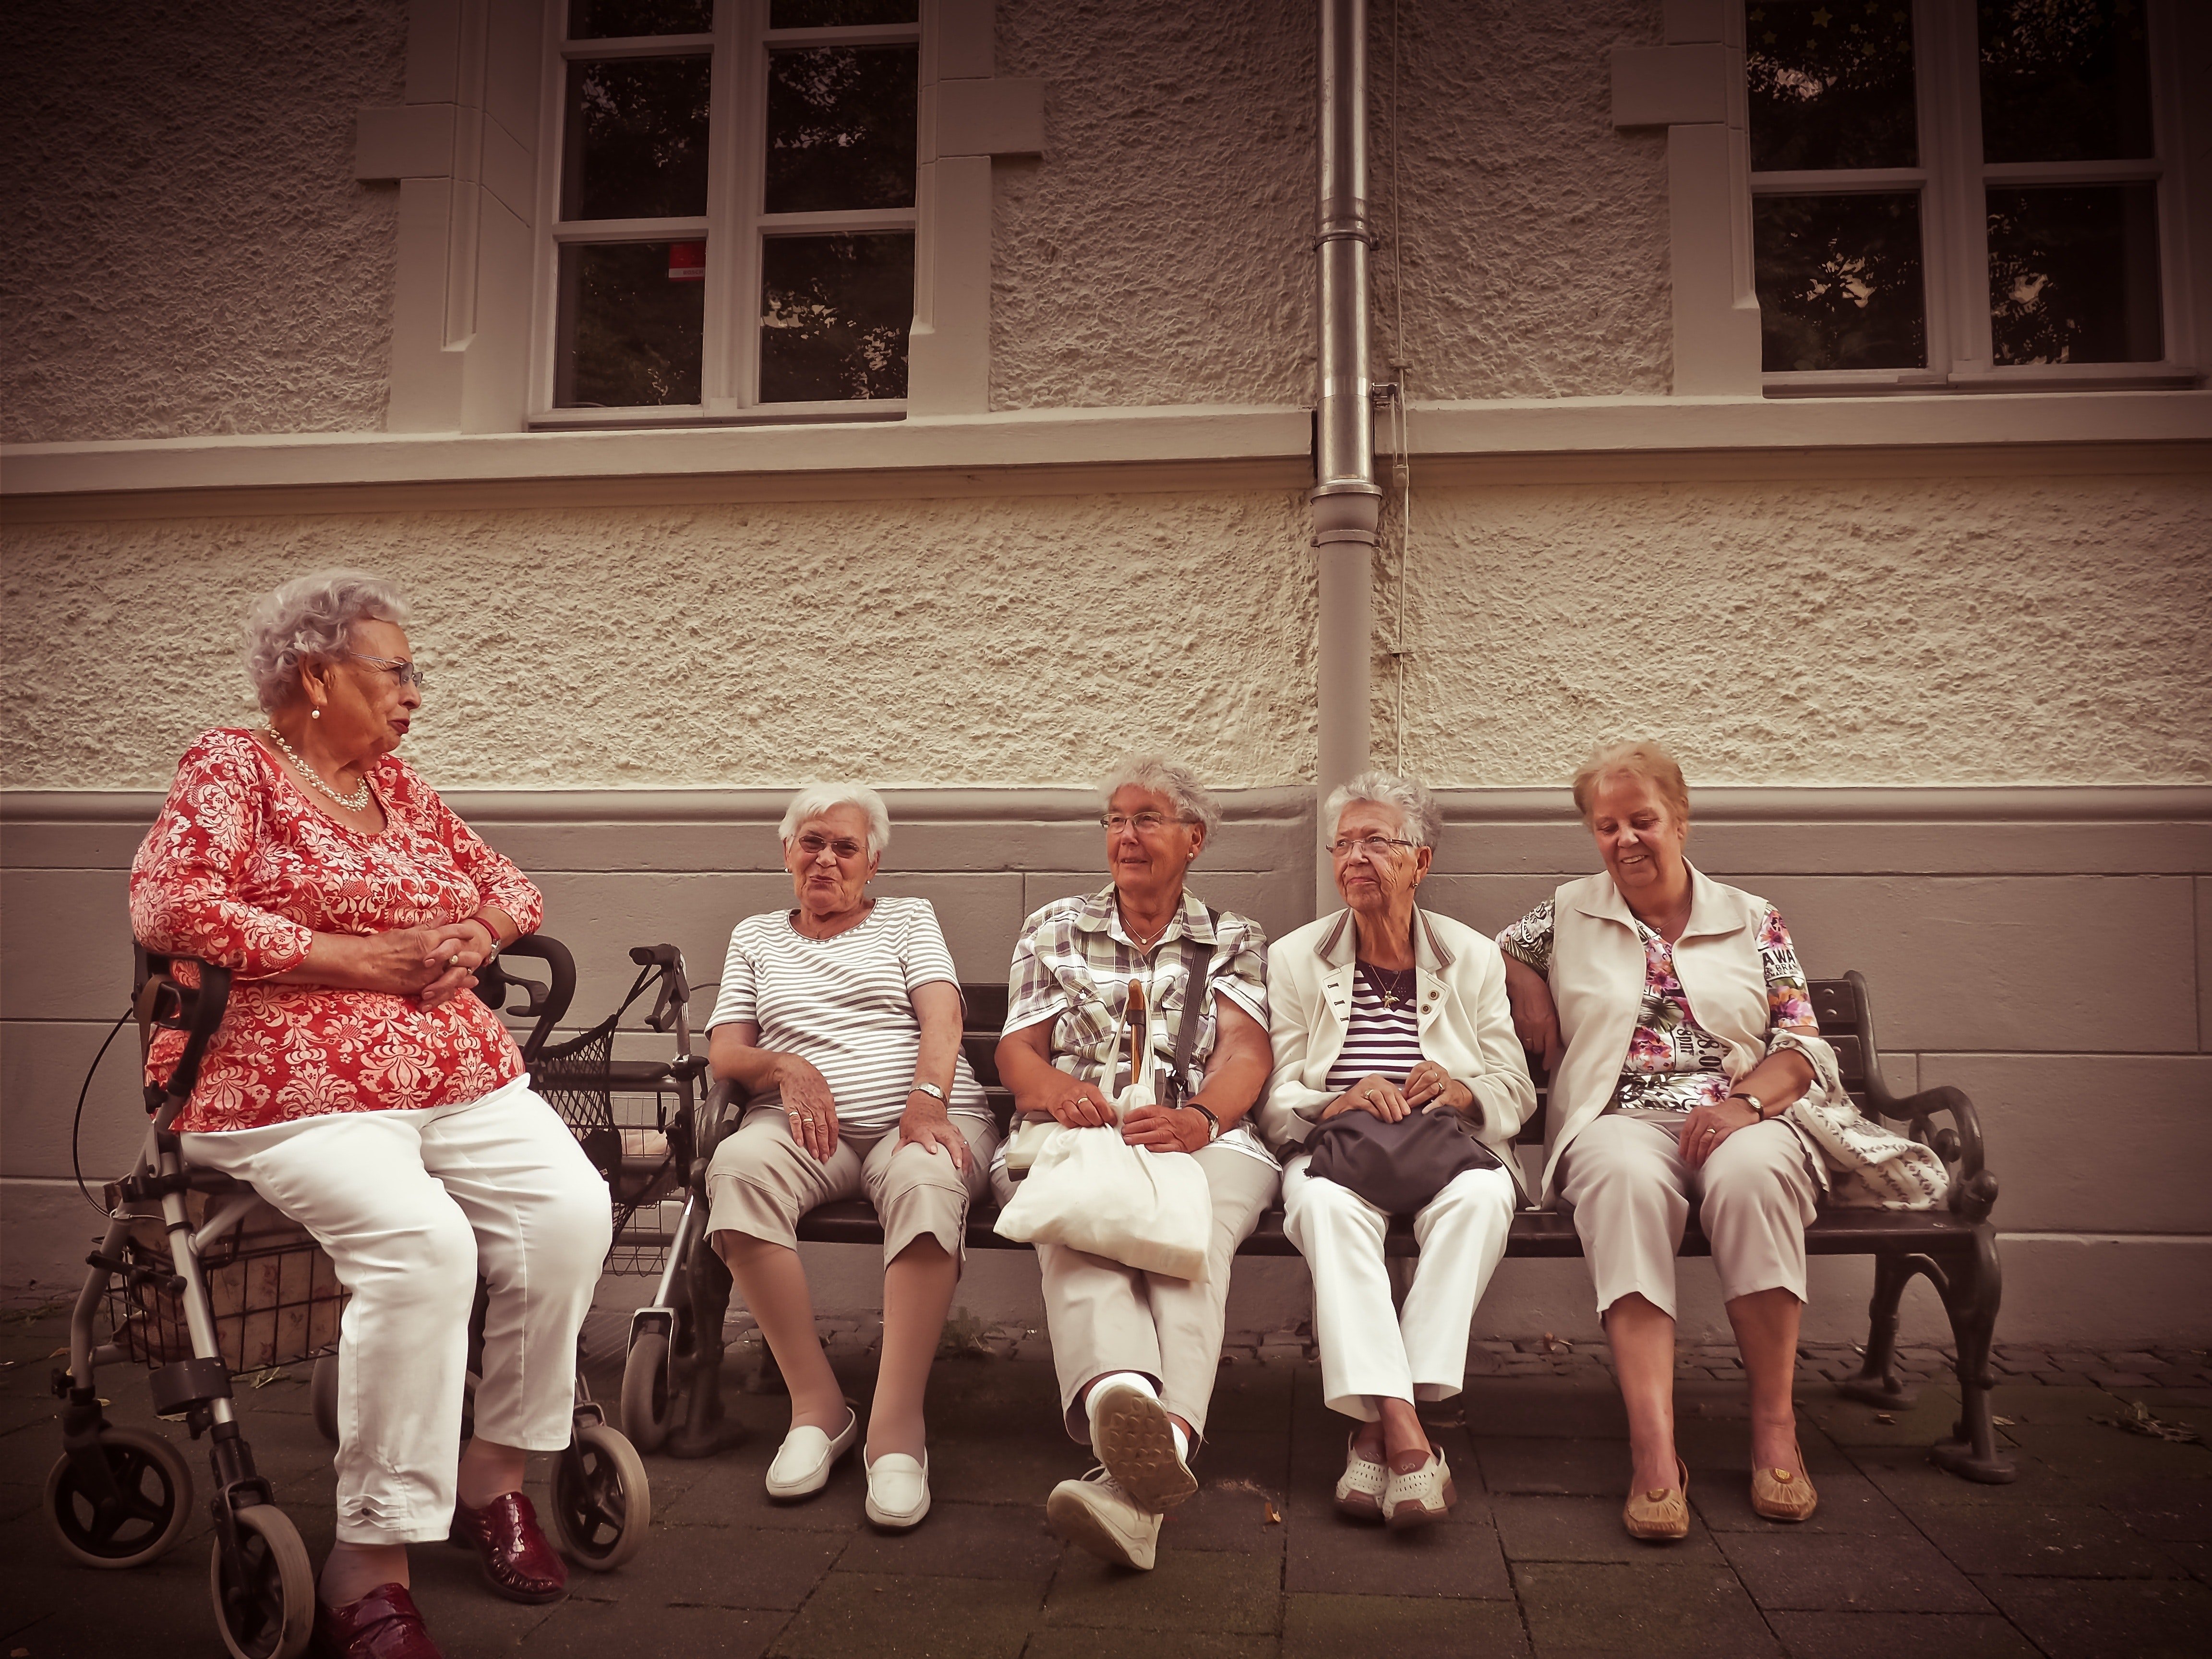 Senior ladies sitting together on a bench. | Source: Pixabay